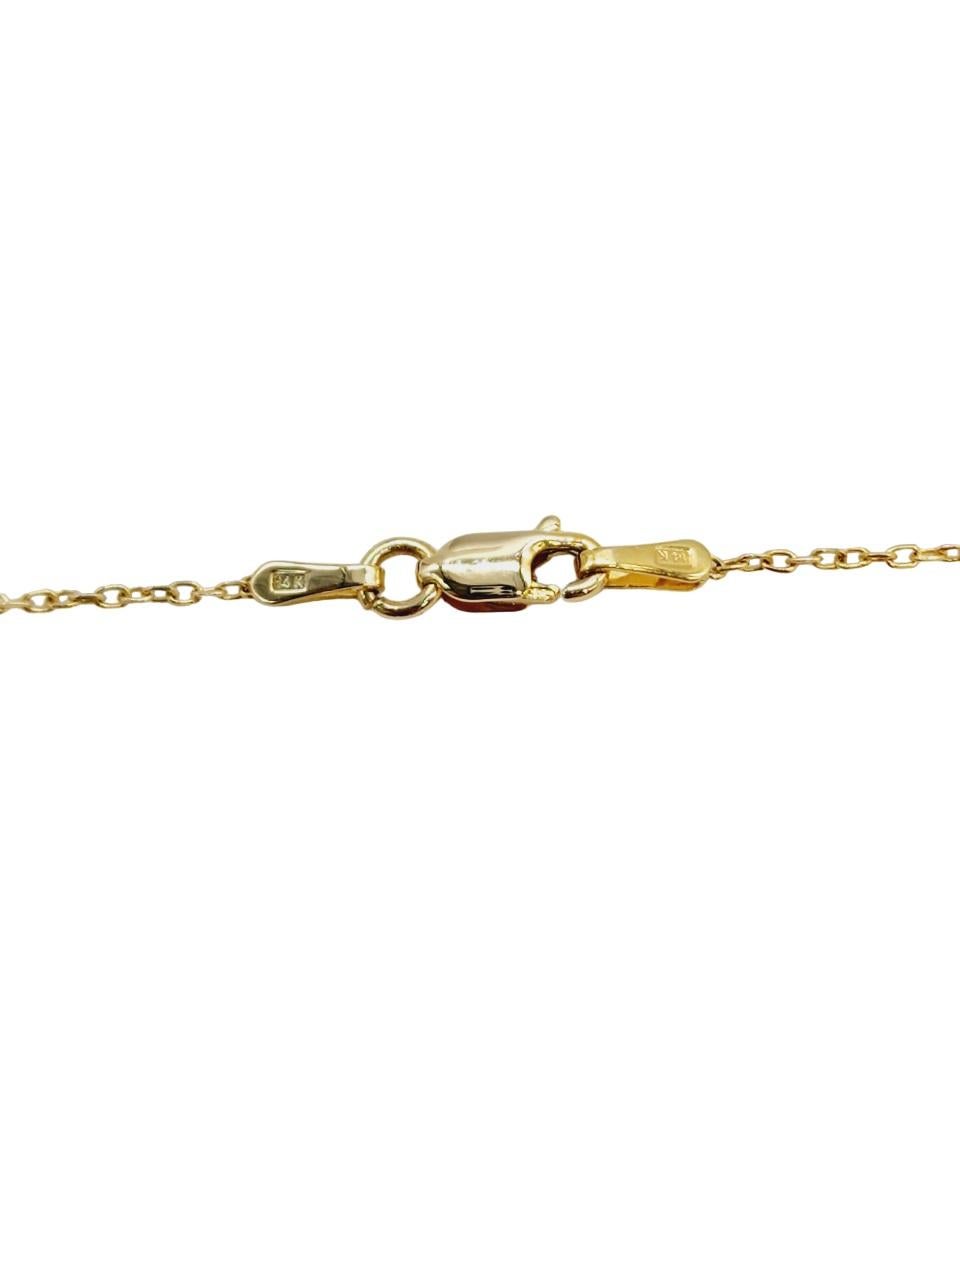 Women's 1.65 Carat Mini Diamond Necklace Chain 14 Karat Yellow Gold  23